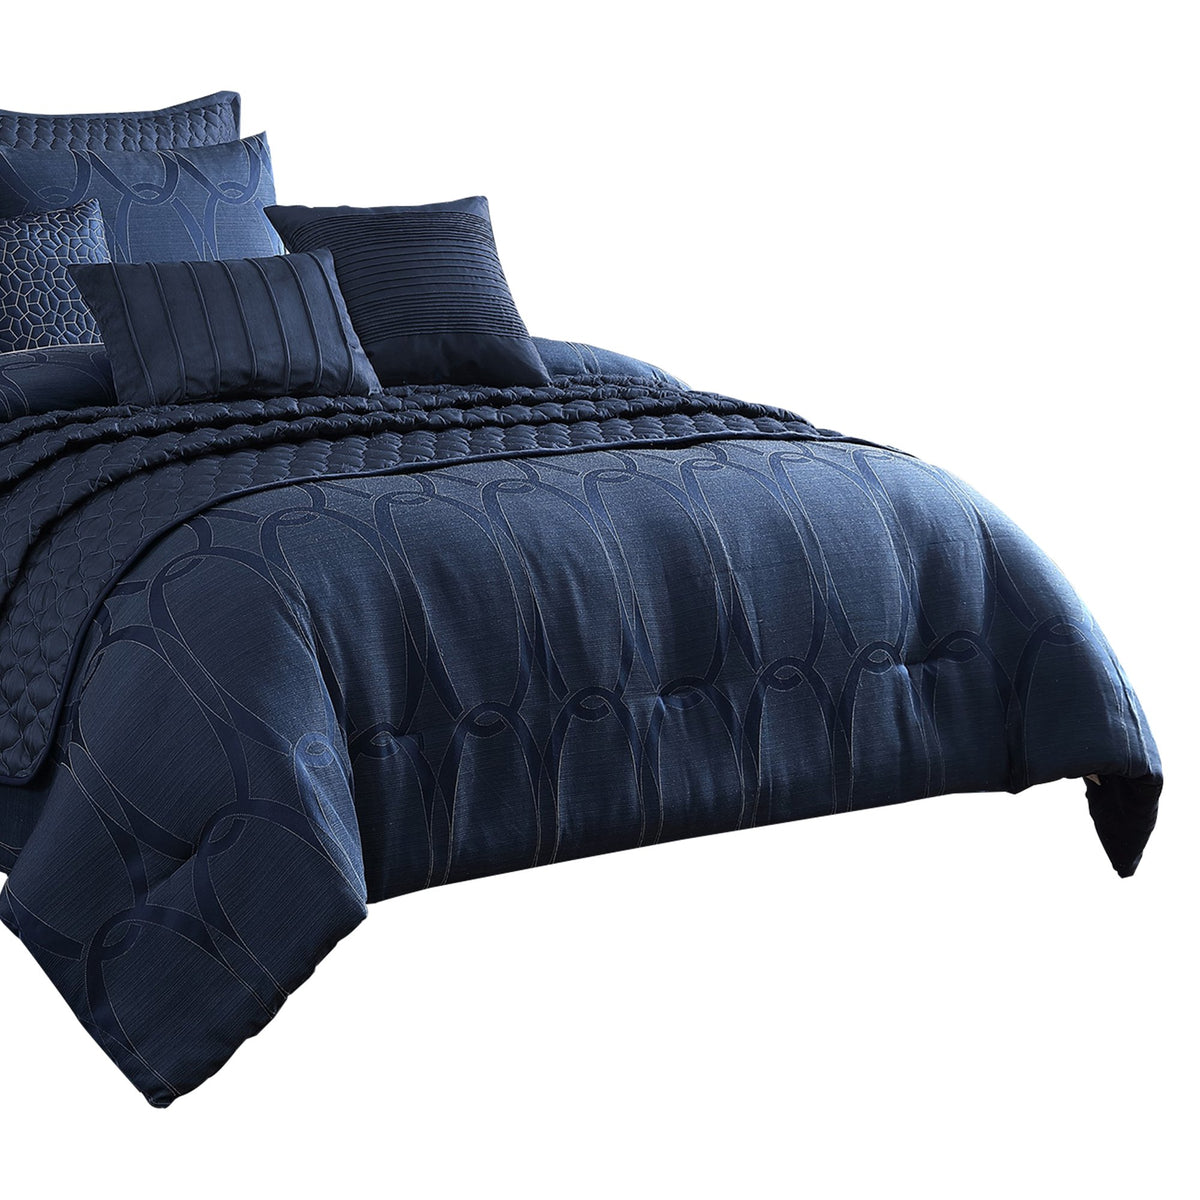 10 Piece Queen Polyester Comforter Set with Geometric Print, Dark Blue - BM225146